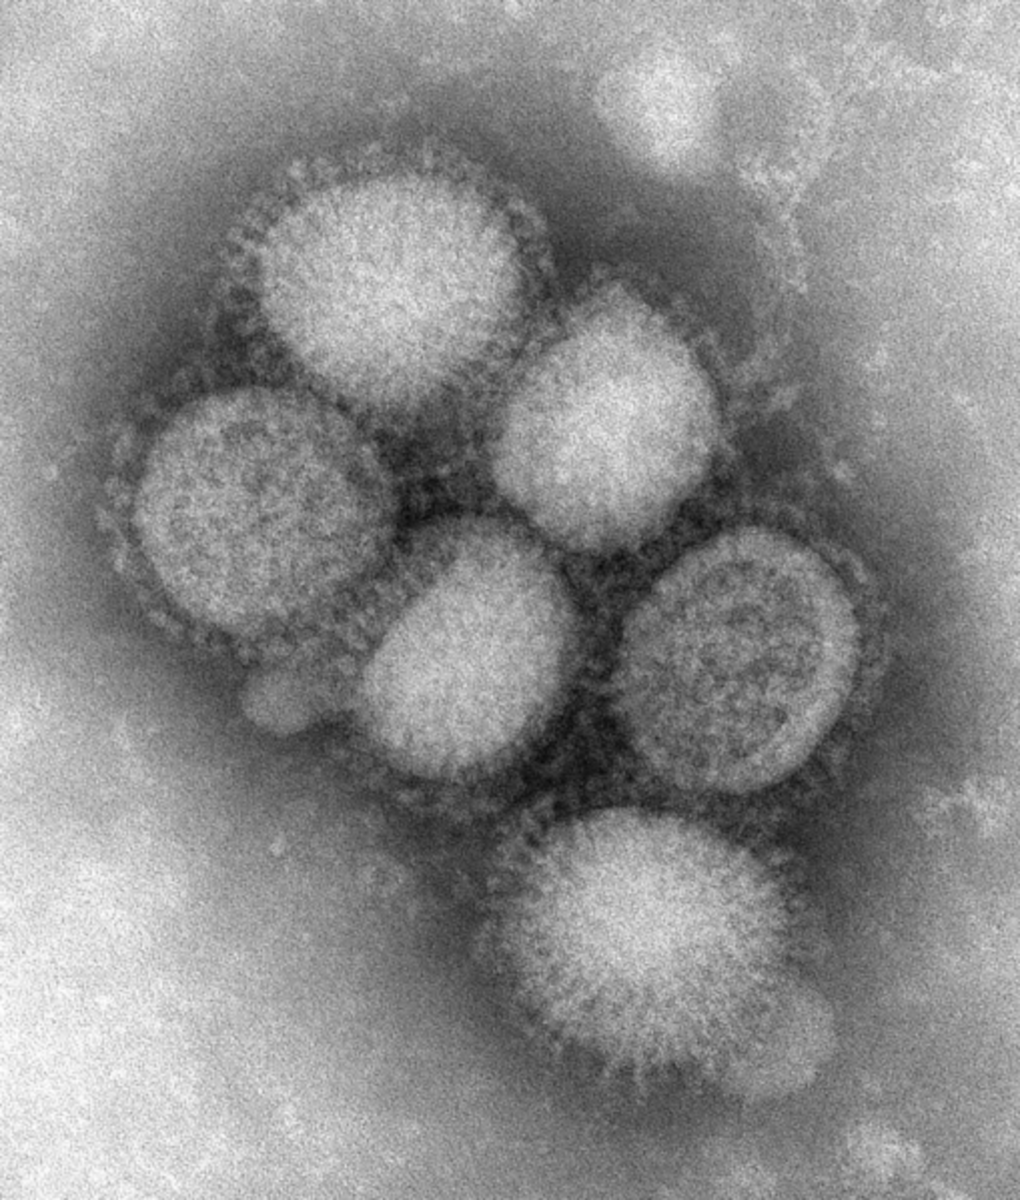 Microscopic image of the swine flu virus